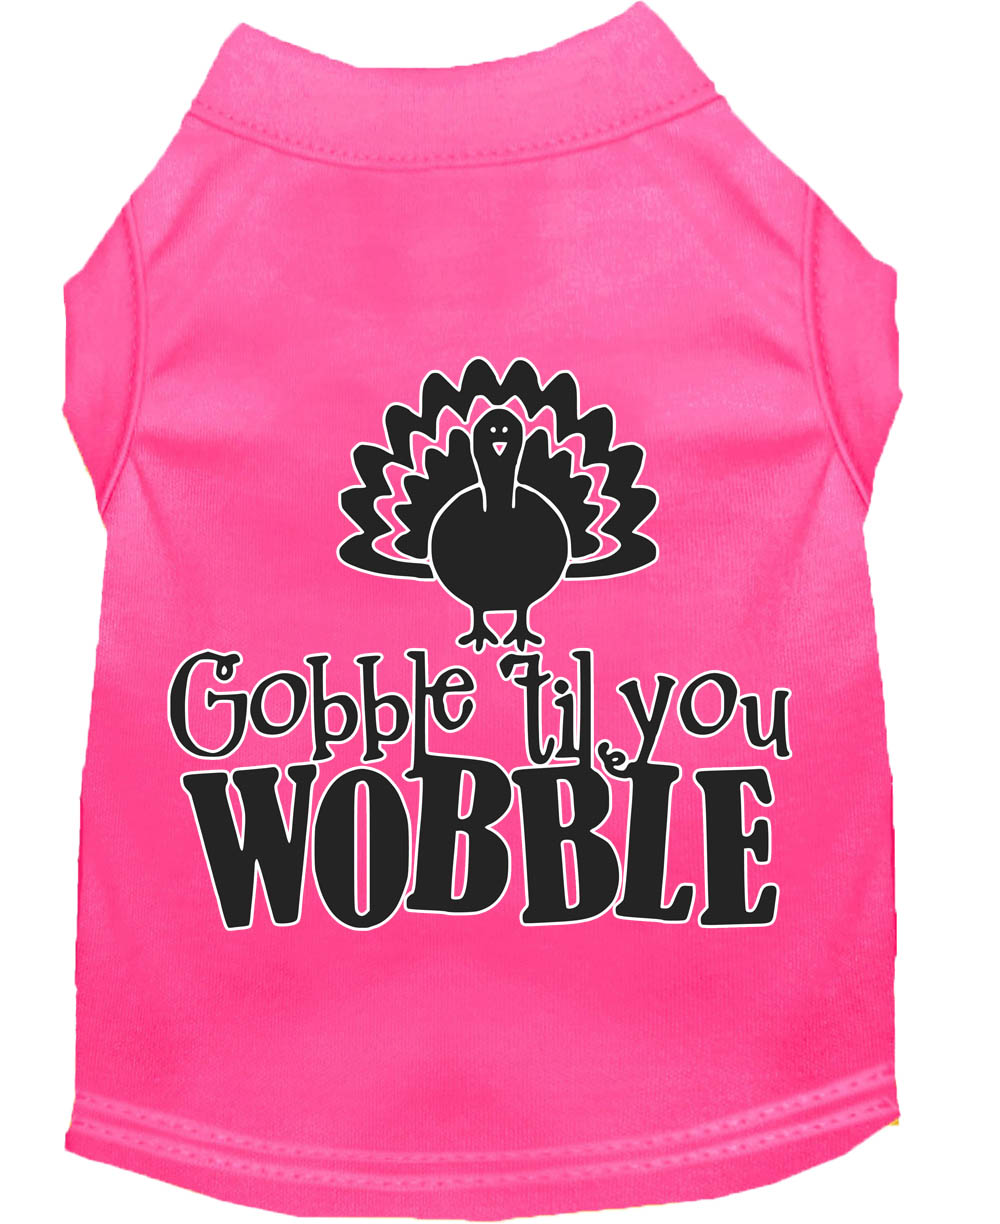 Gobble til You Wobble Screen Print Dog Shirt Bright Pink Lg